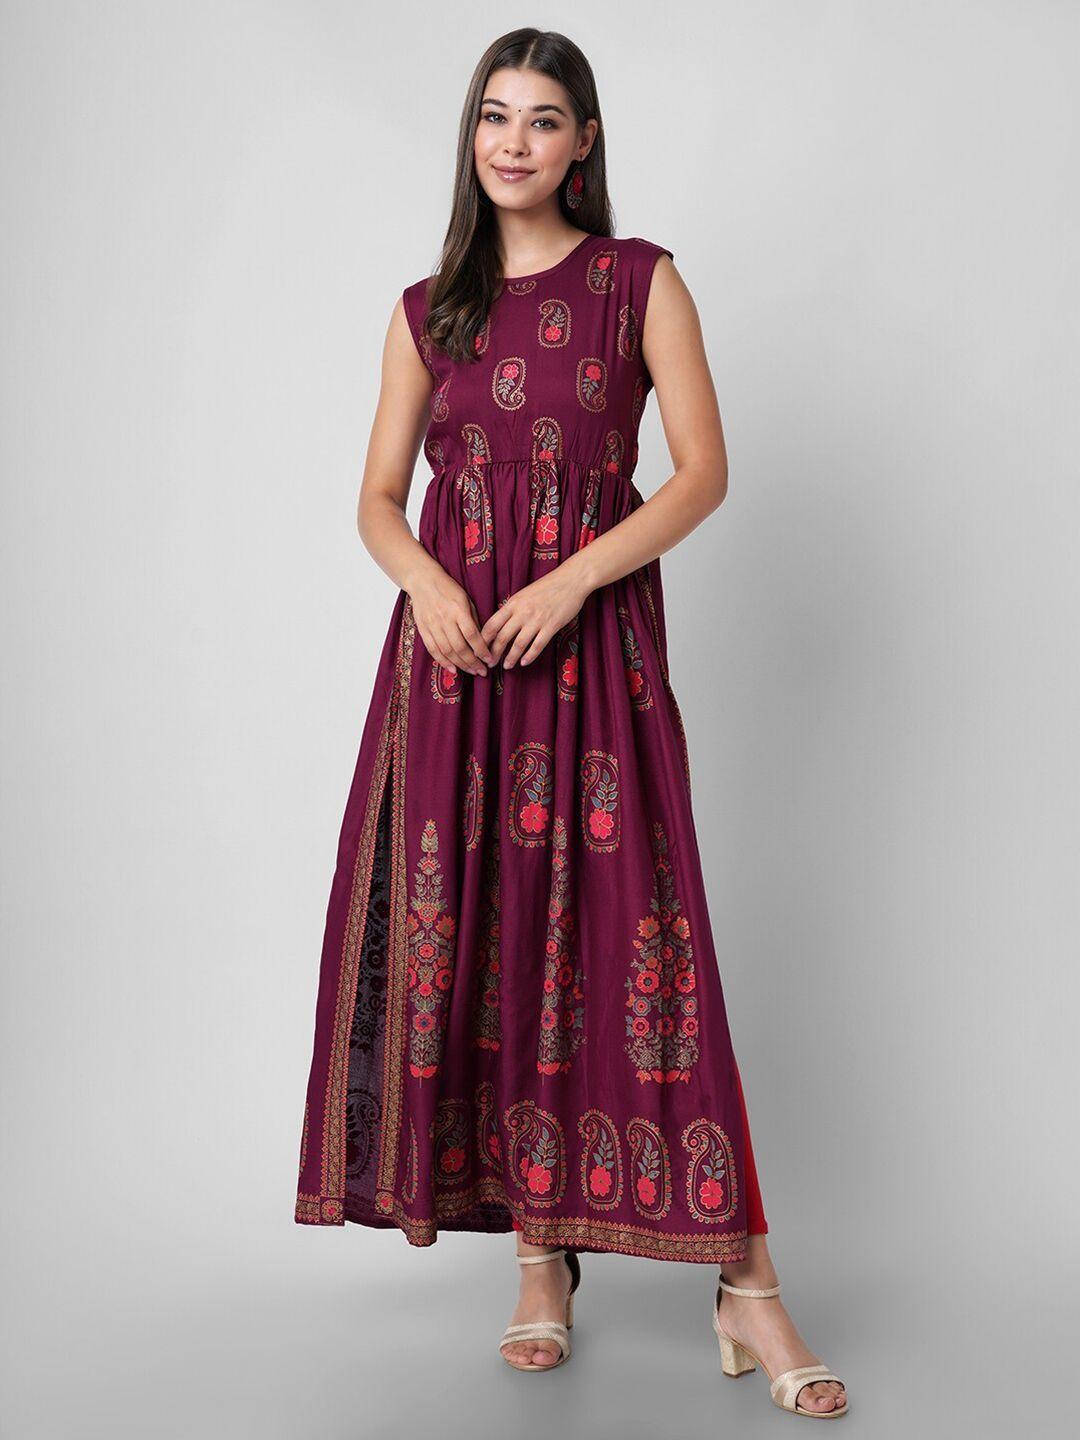 dressar women maroon & orange ethnic motifs maxi dress